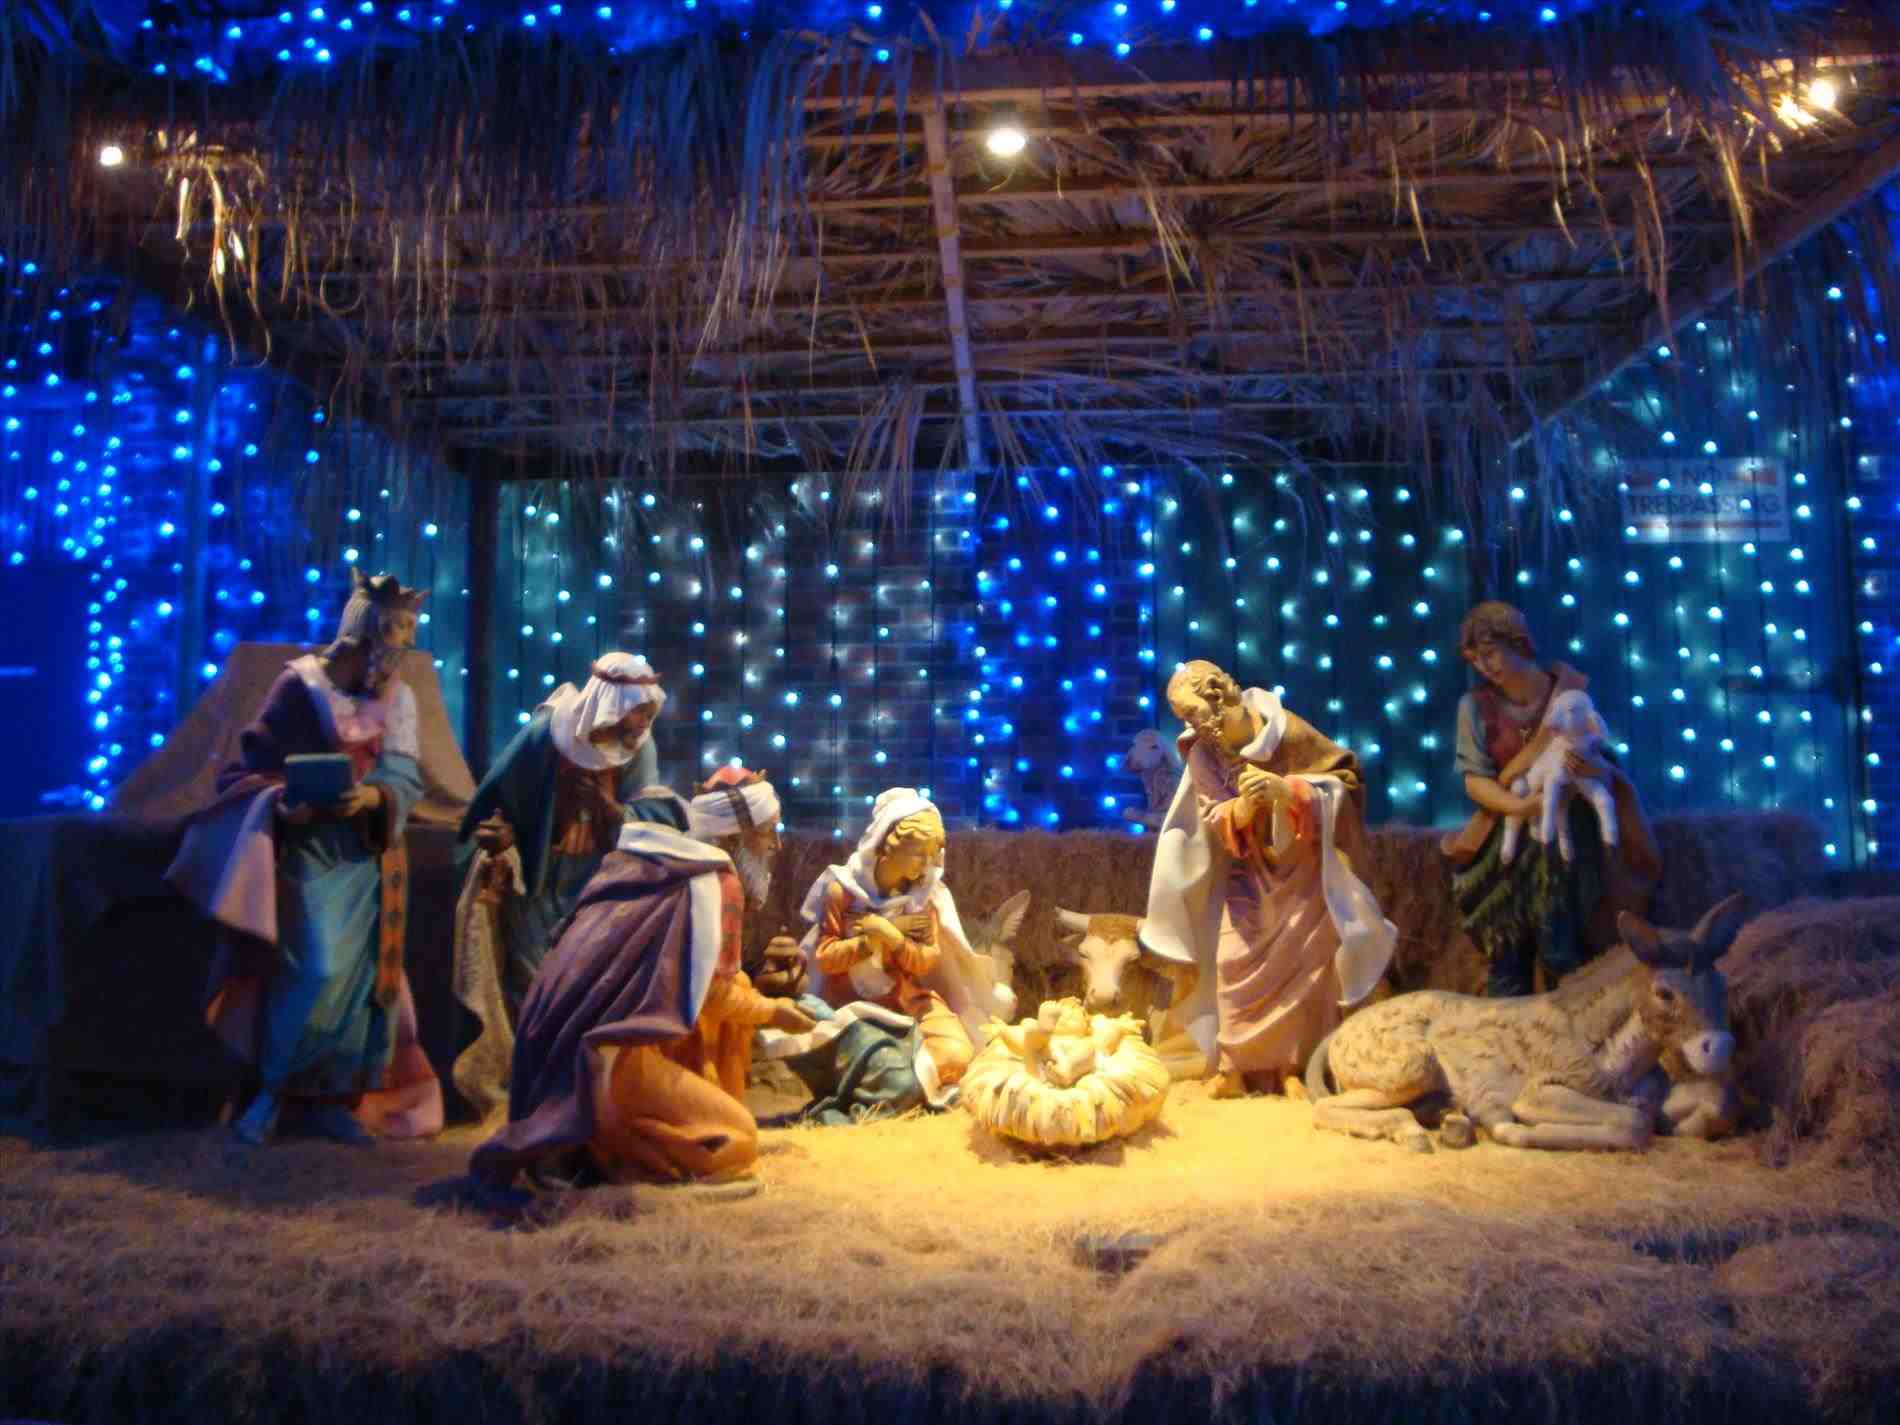 Unique FHDQ Background, Christmas Nativity Scene